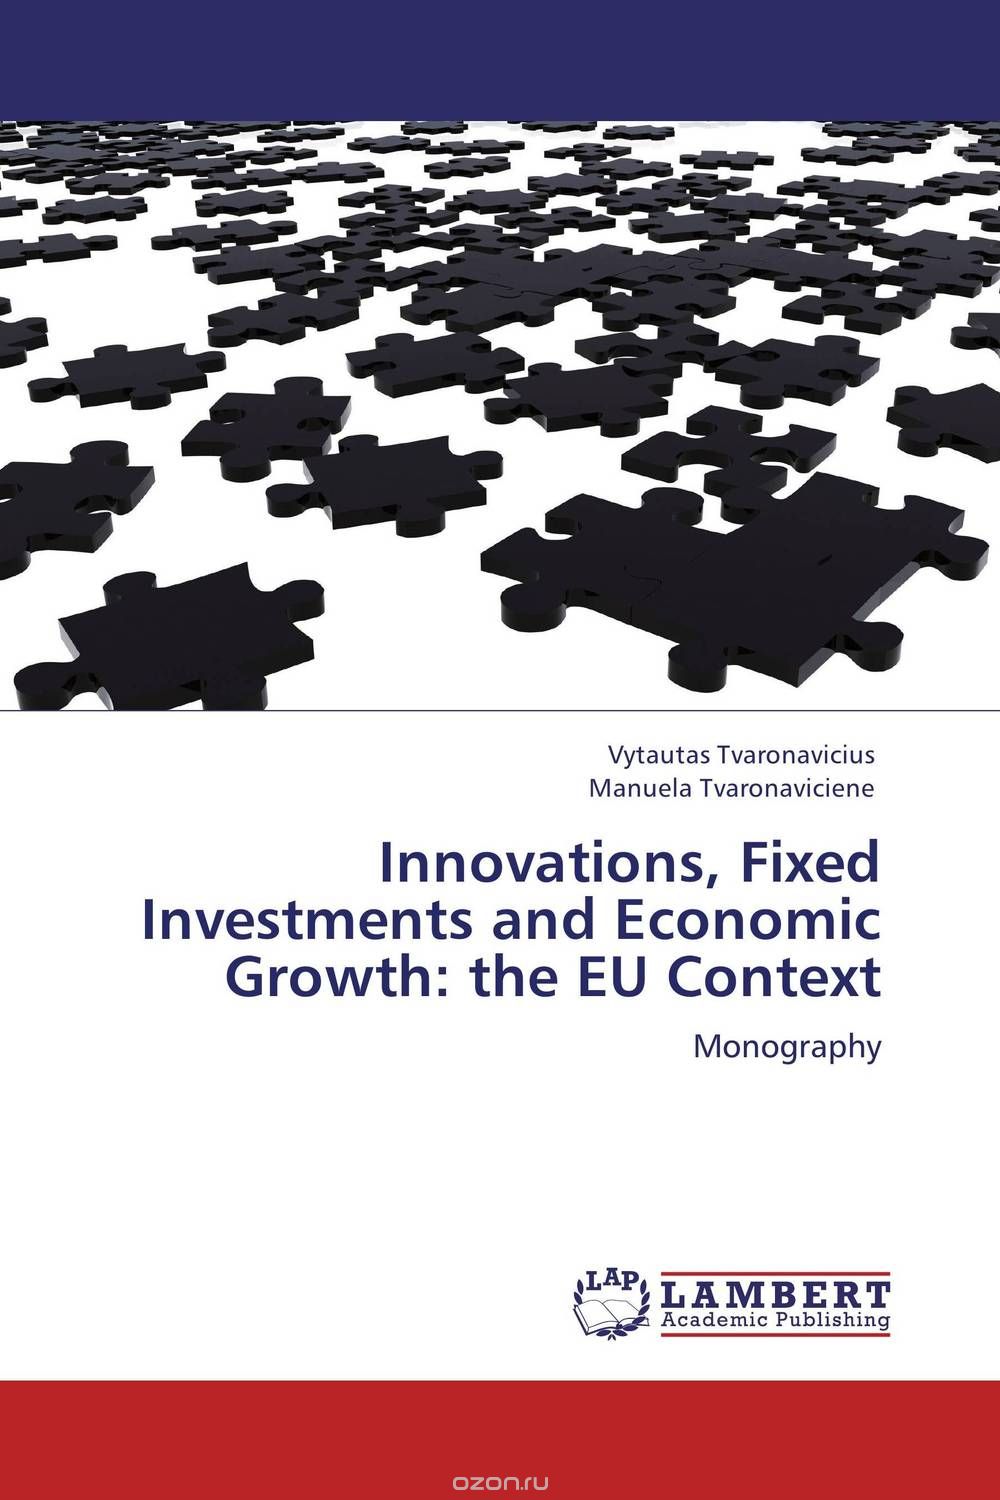 Скачать книгу "Innovations, Fixed Investments and Economic Growth: the EU Context"